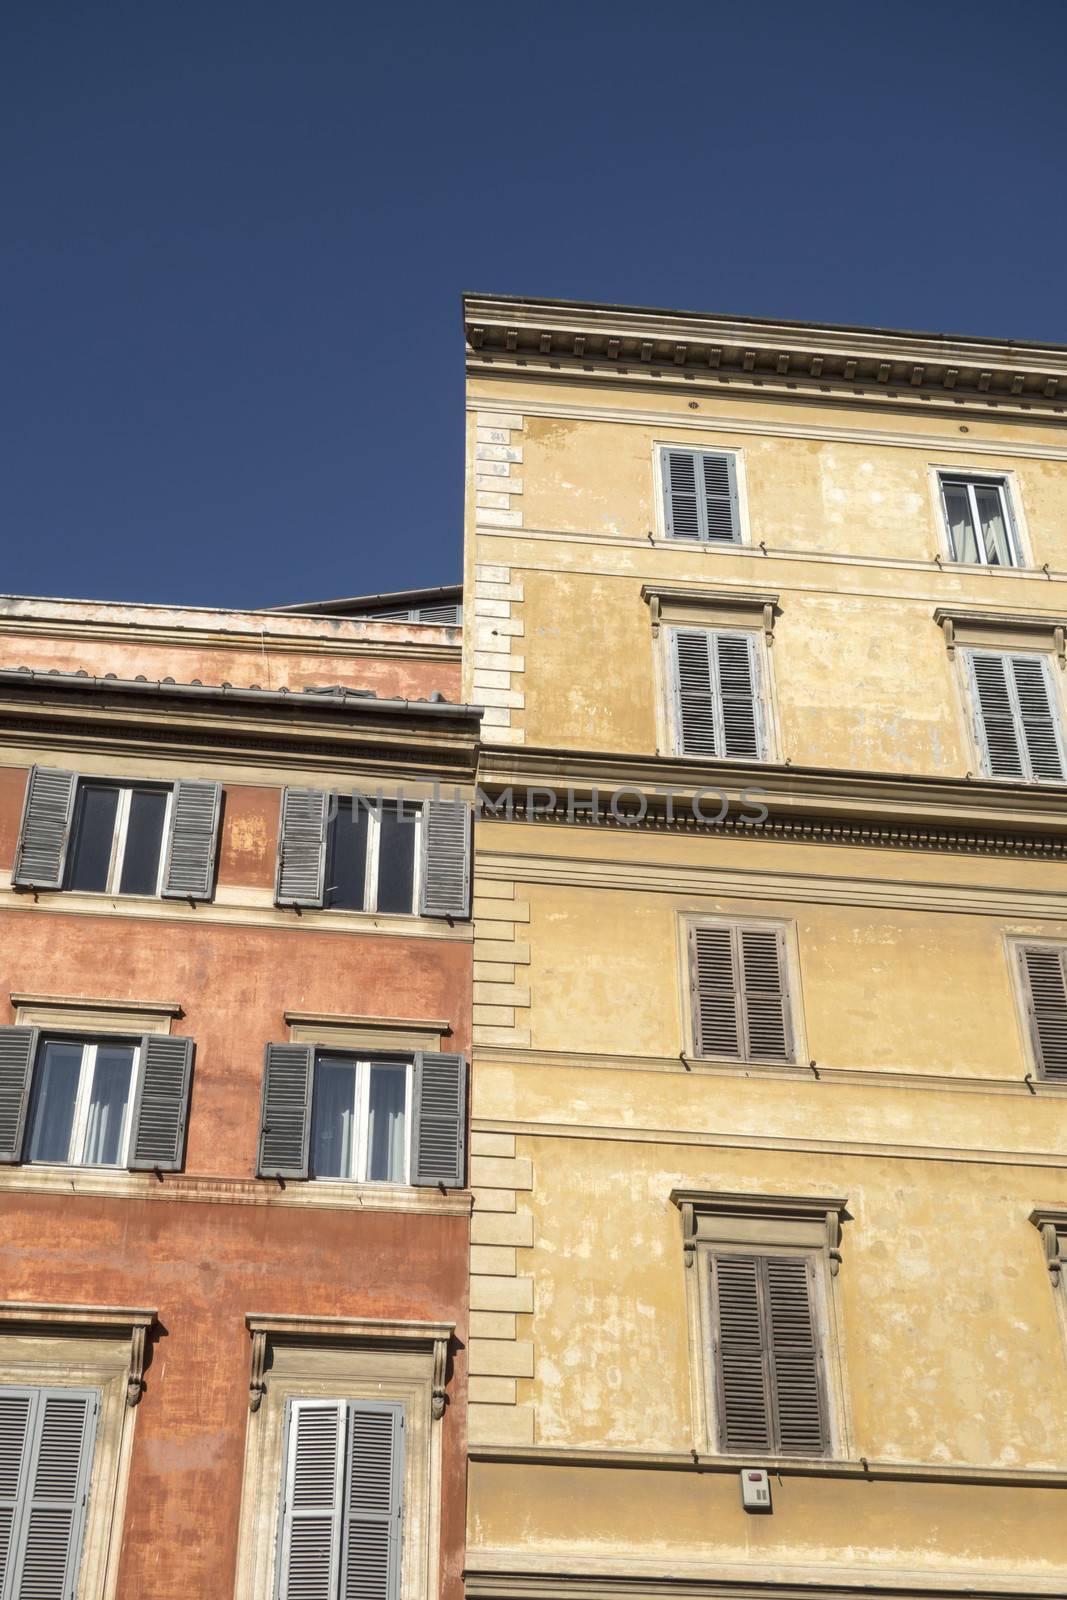 Windows of old buildings in Rome